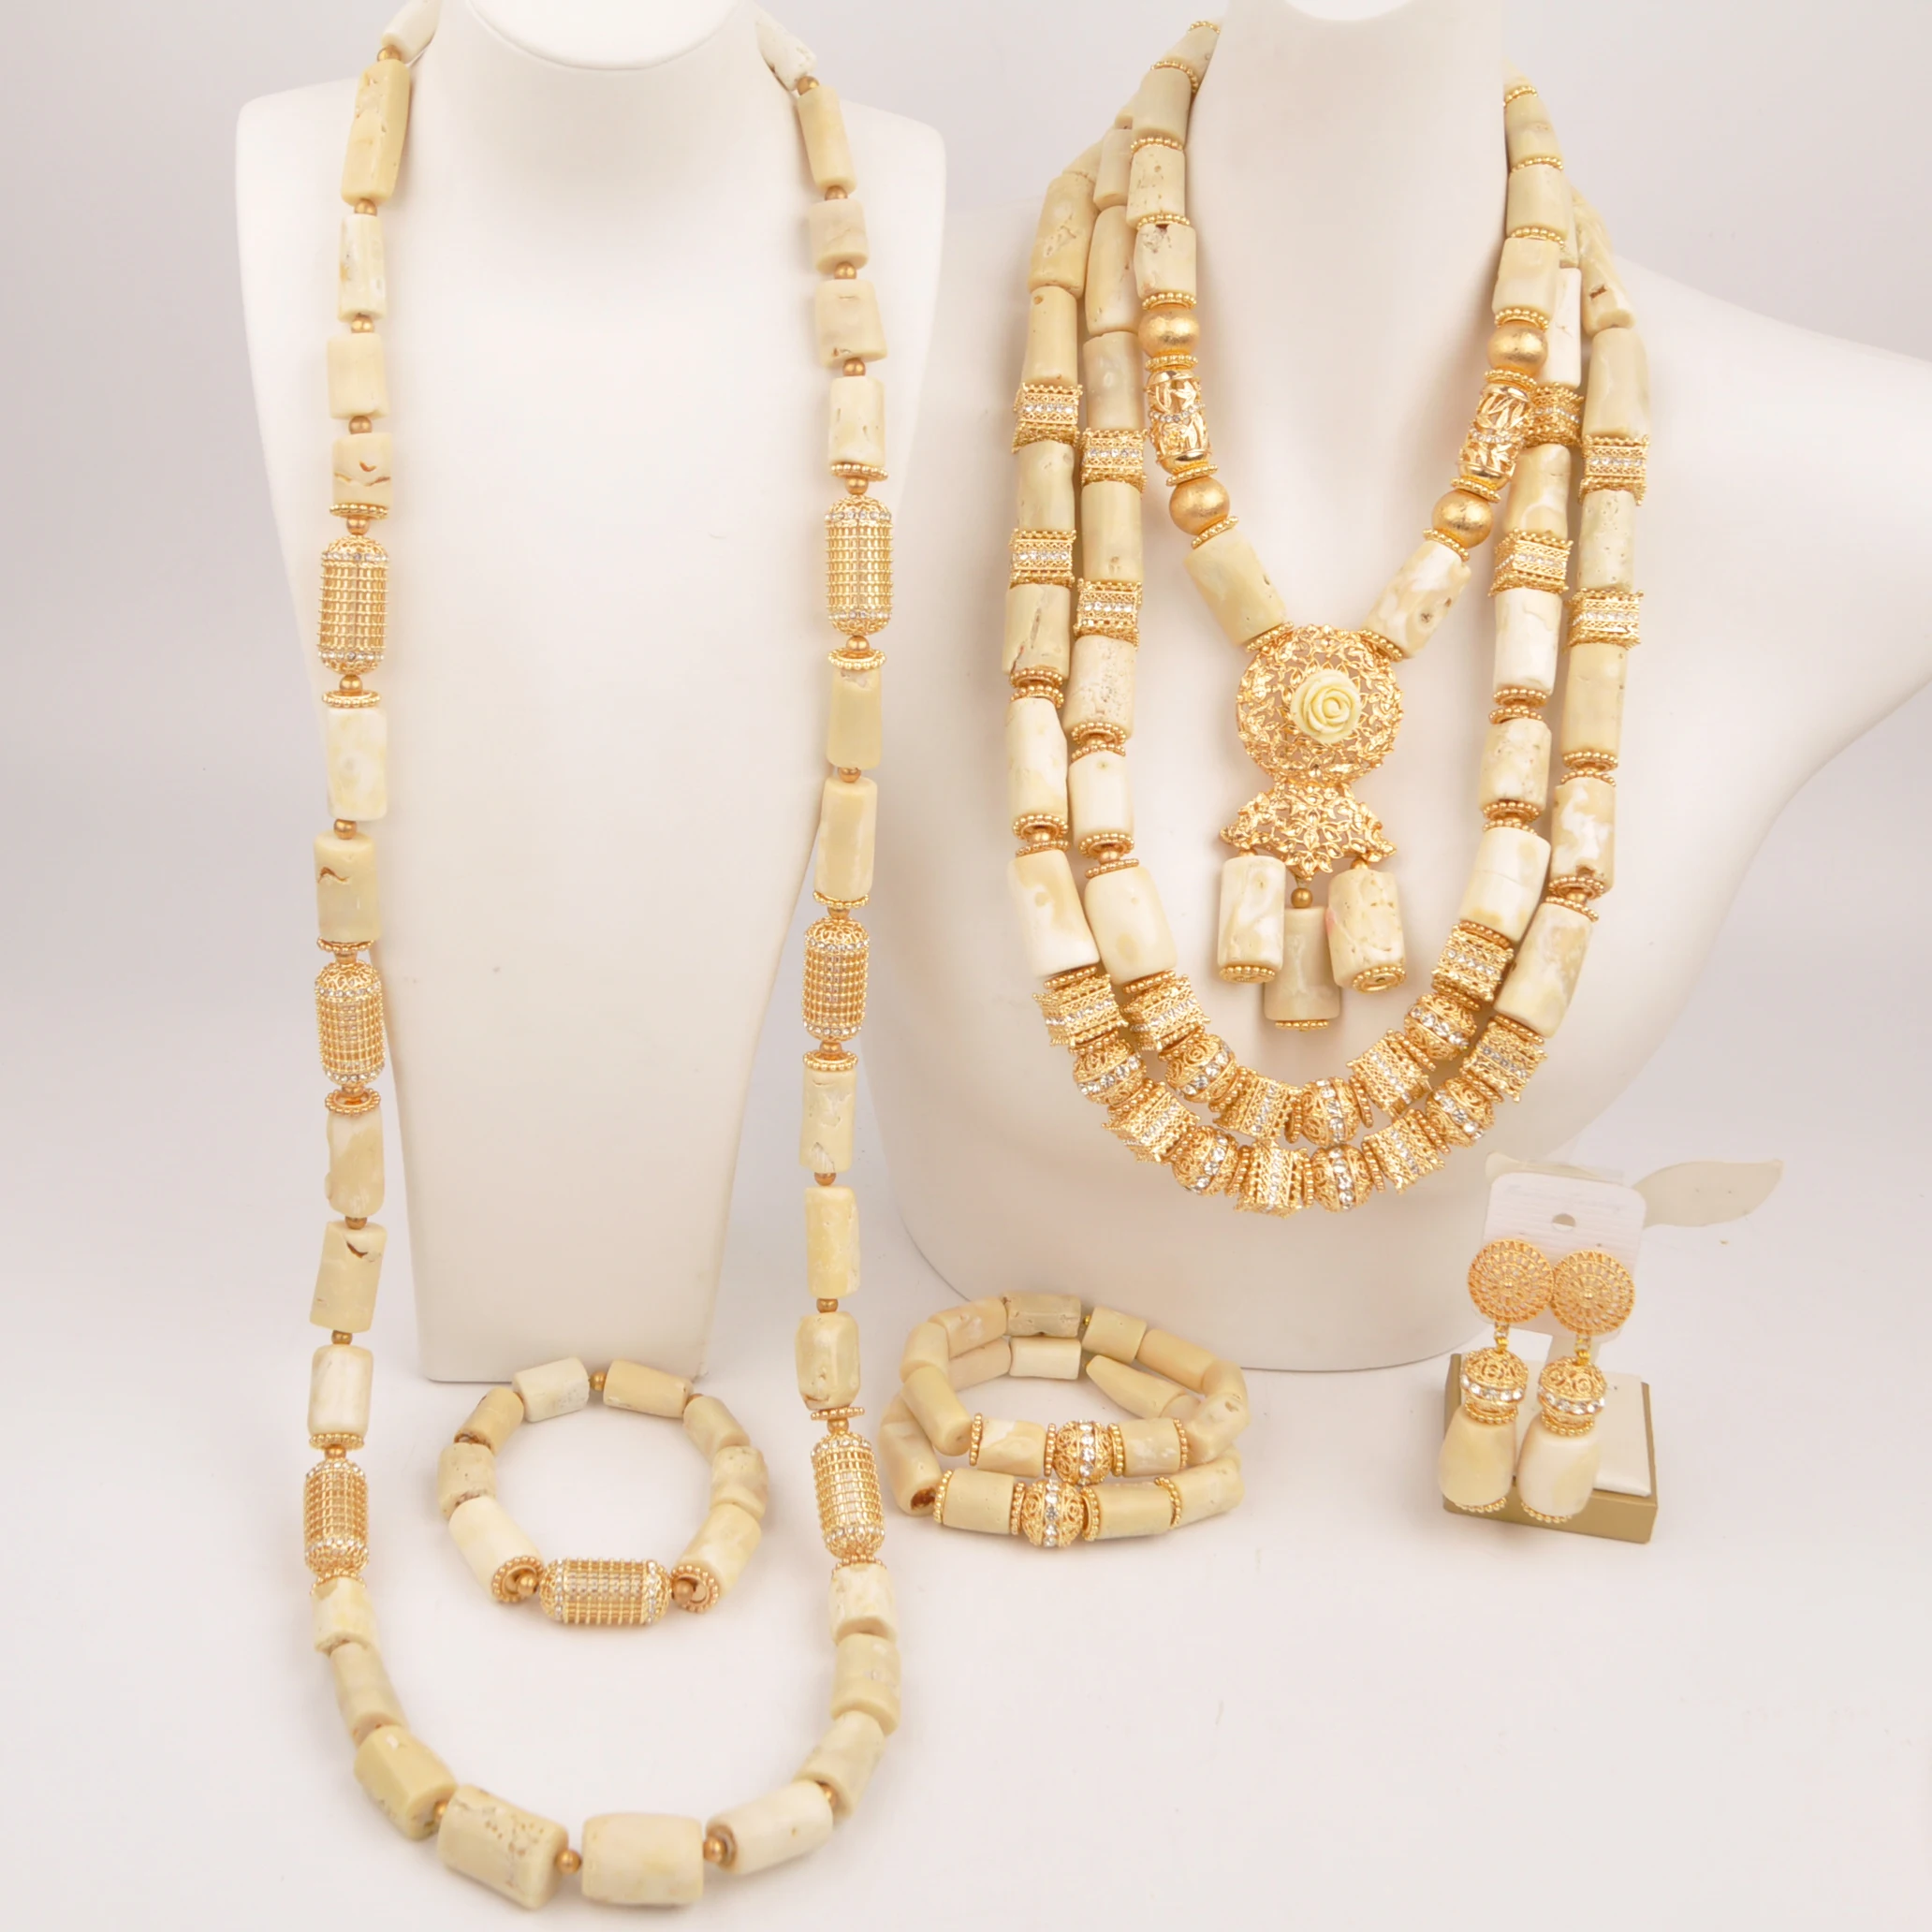 nigerian-wedding-coral-beads-jewelry-set